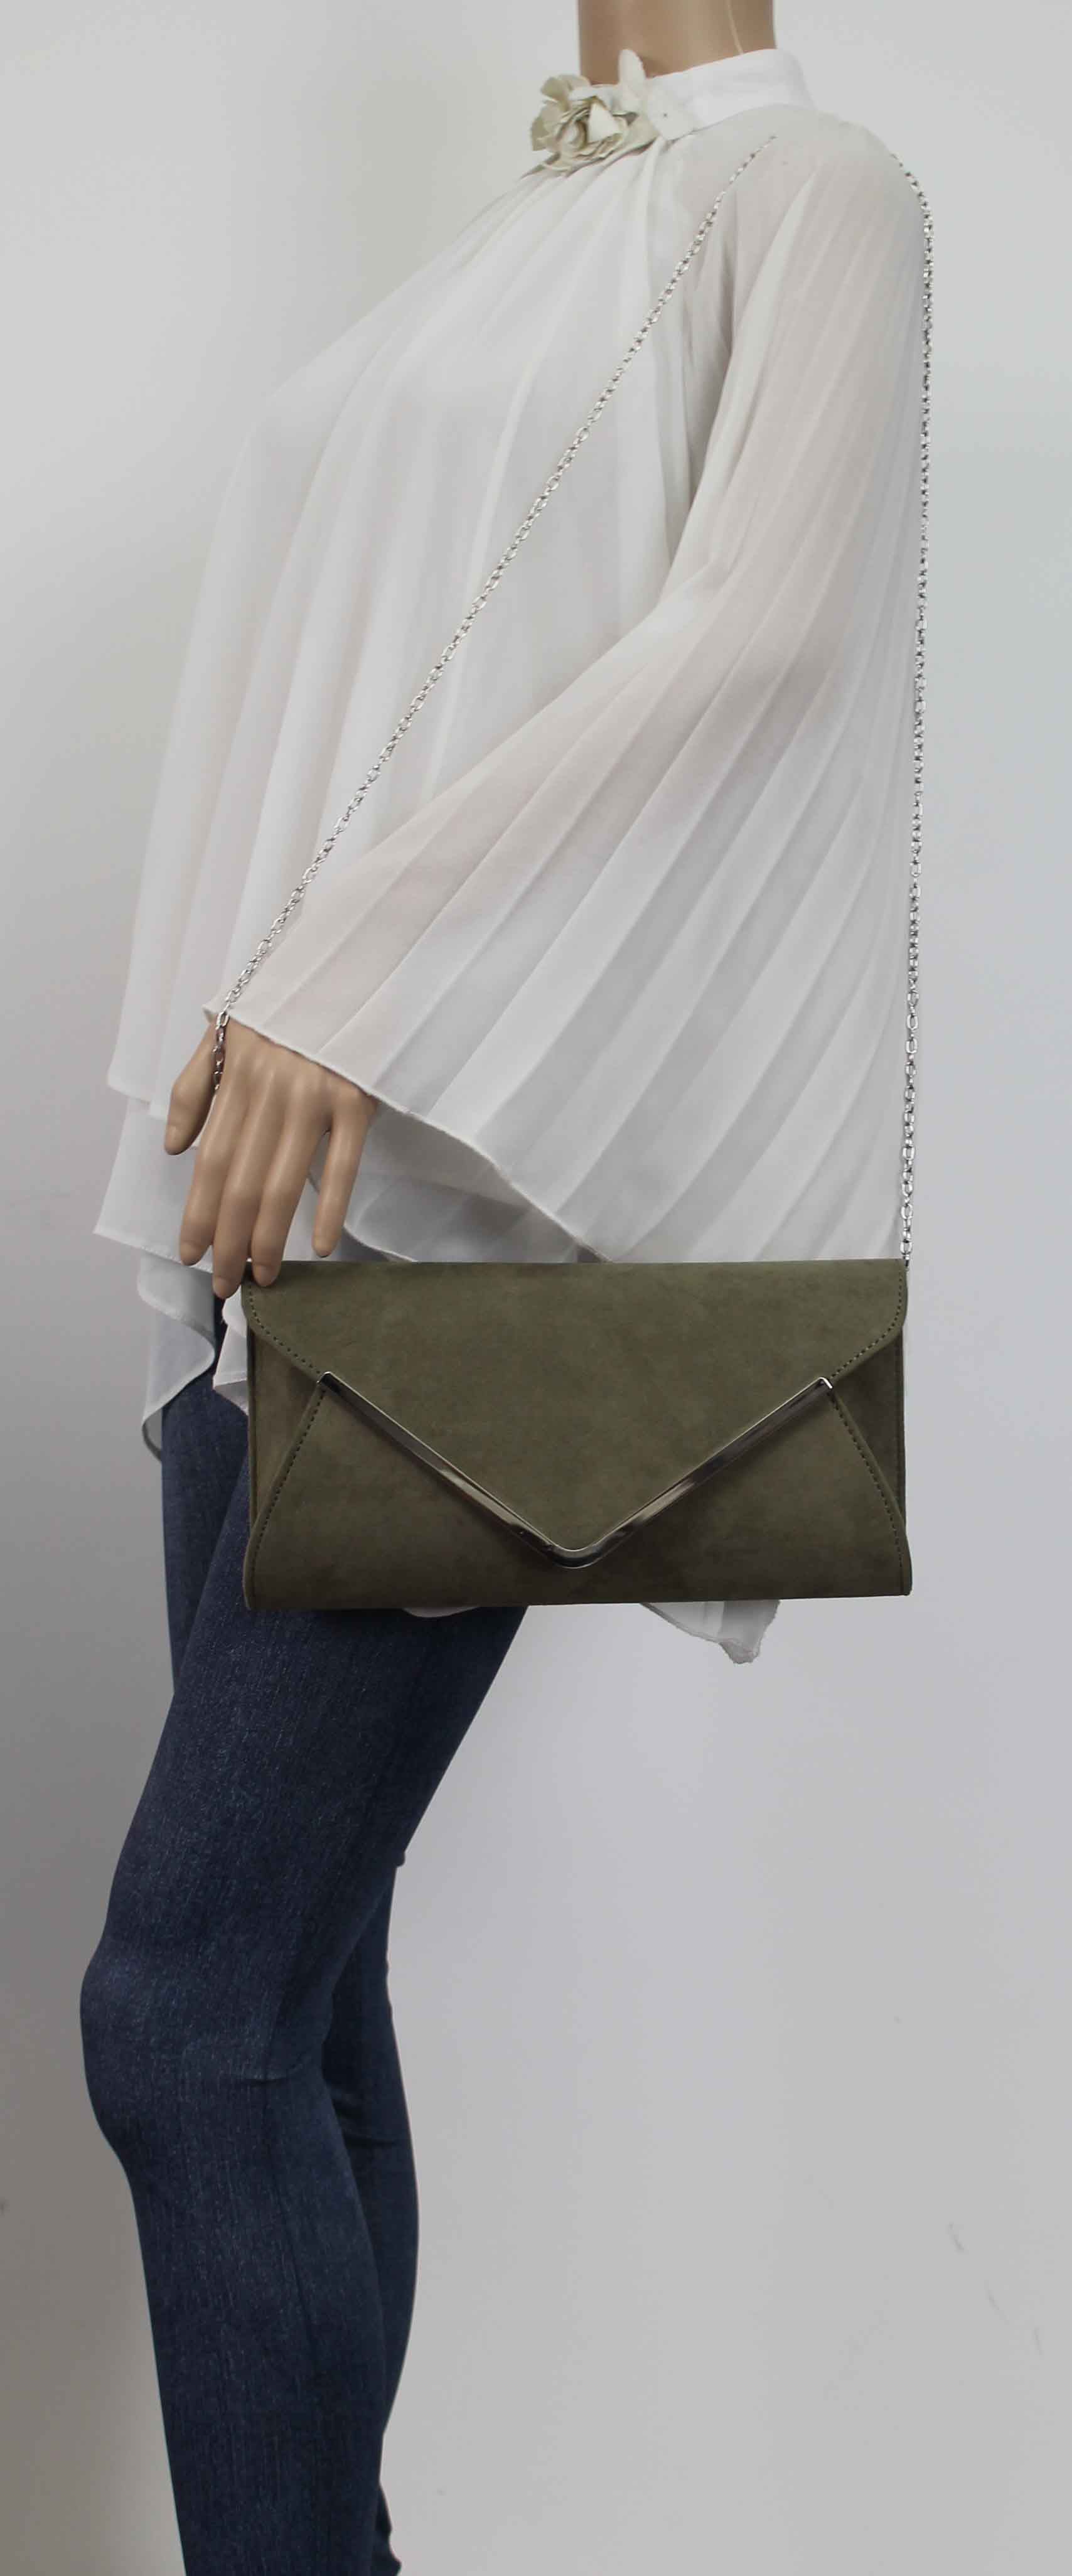 SWANKYSWANS Karlie Suede Clutch Bag Olive Cute Cheap Clutch Bag For Weddings School and Work